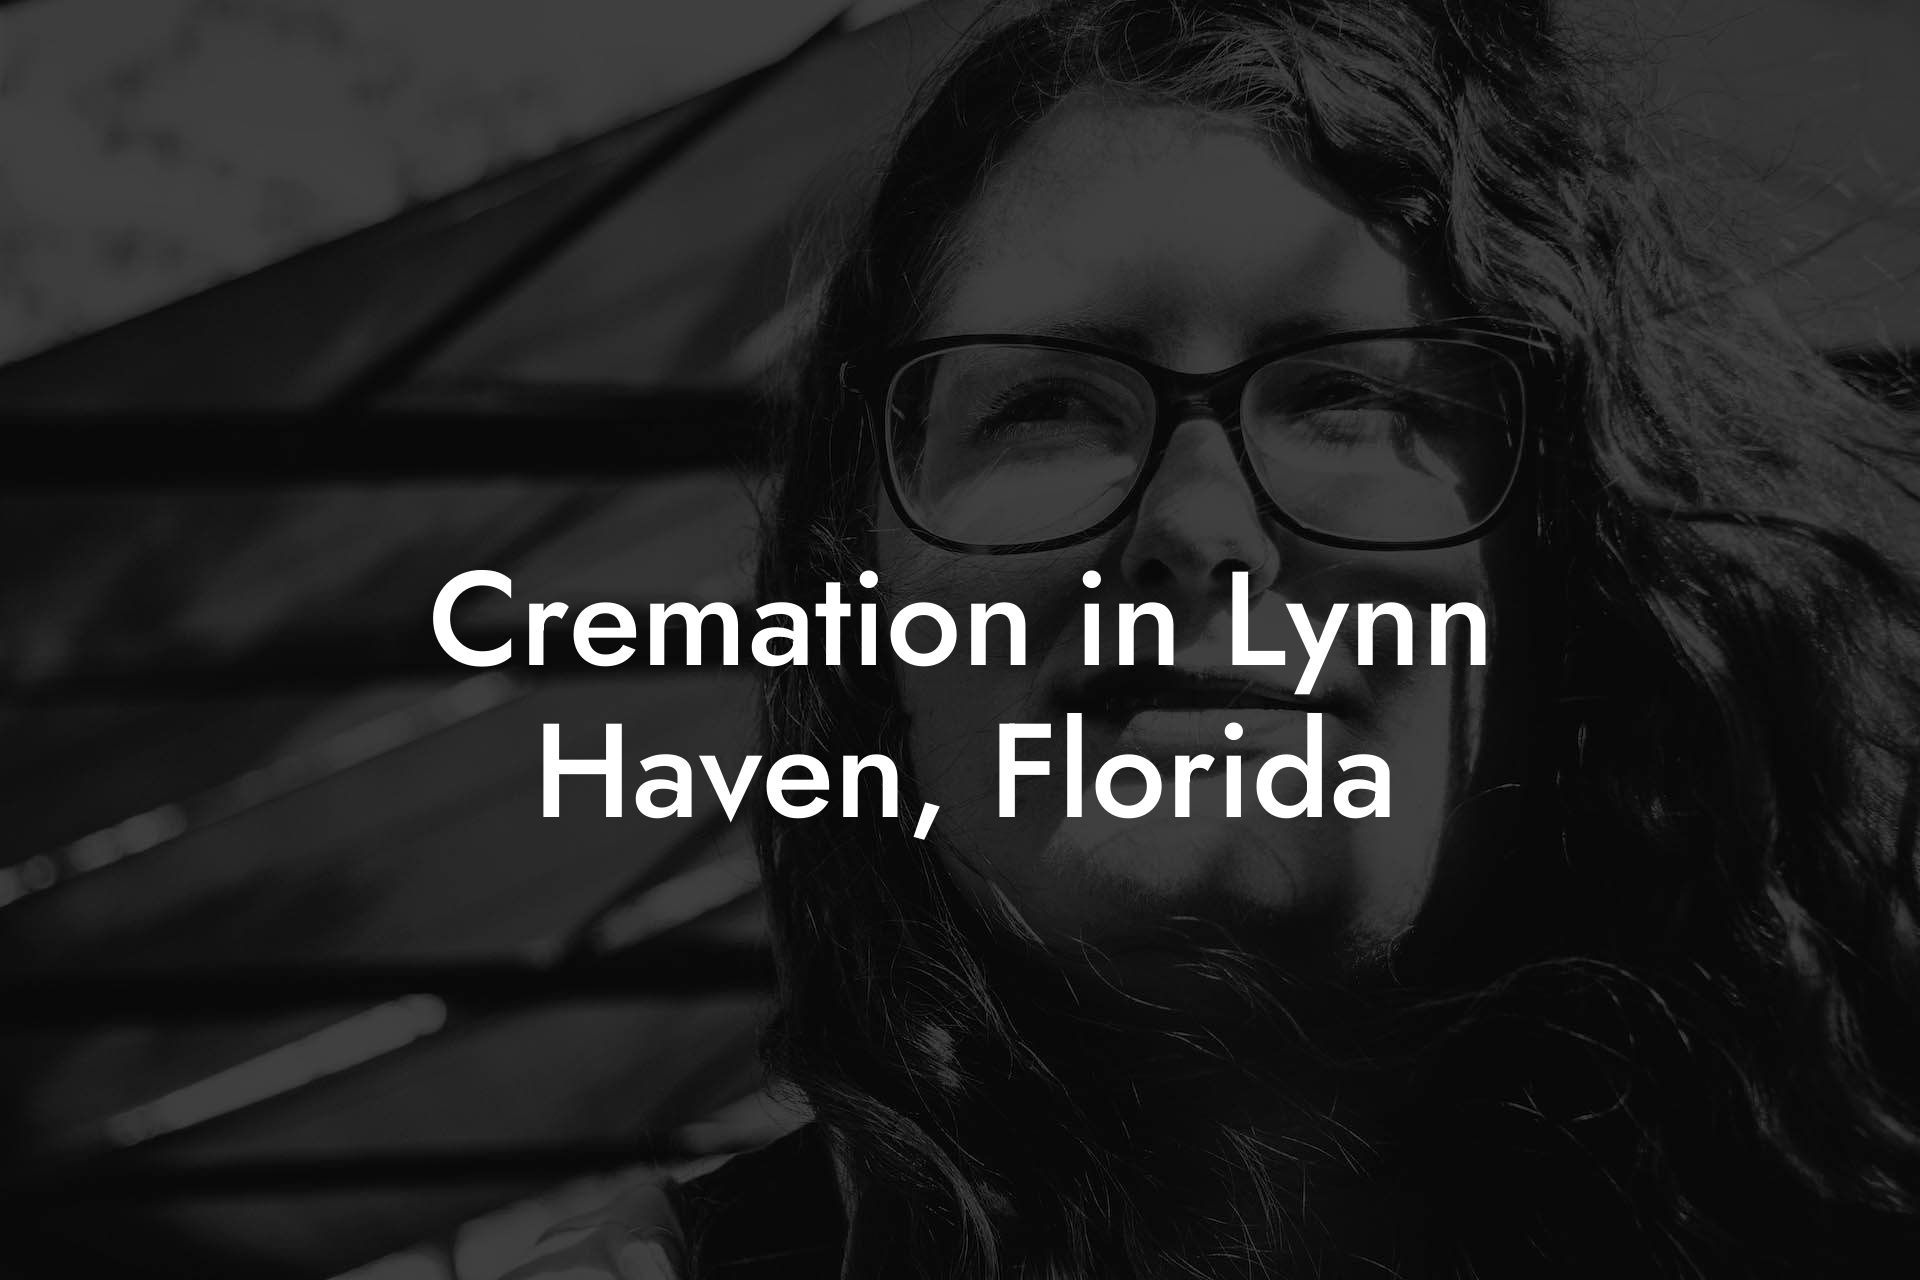 Cremation in Lynn Haven, Florida